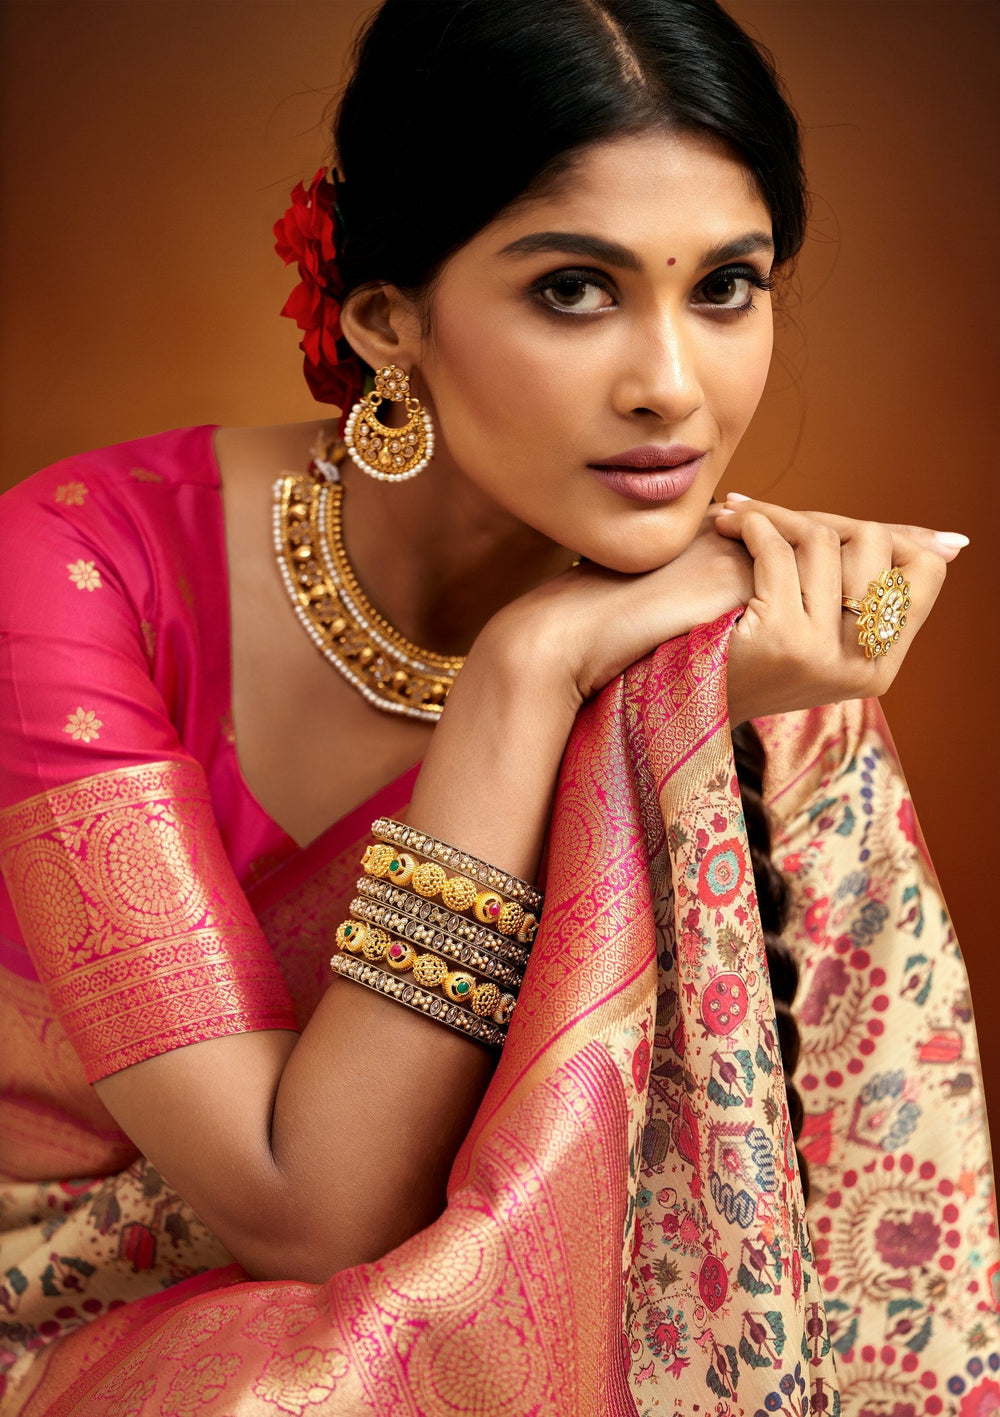 Ethereal Skin-Toned Kalamkari Saree: Banaras Elegance Draped in Artistic Splendor